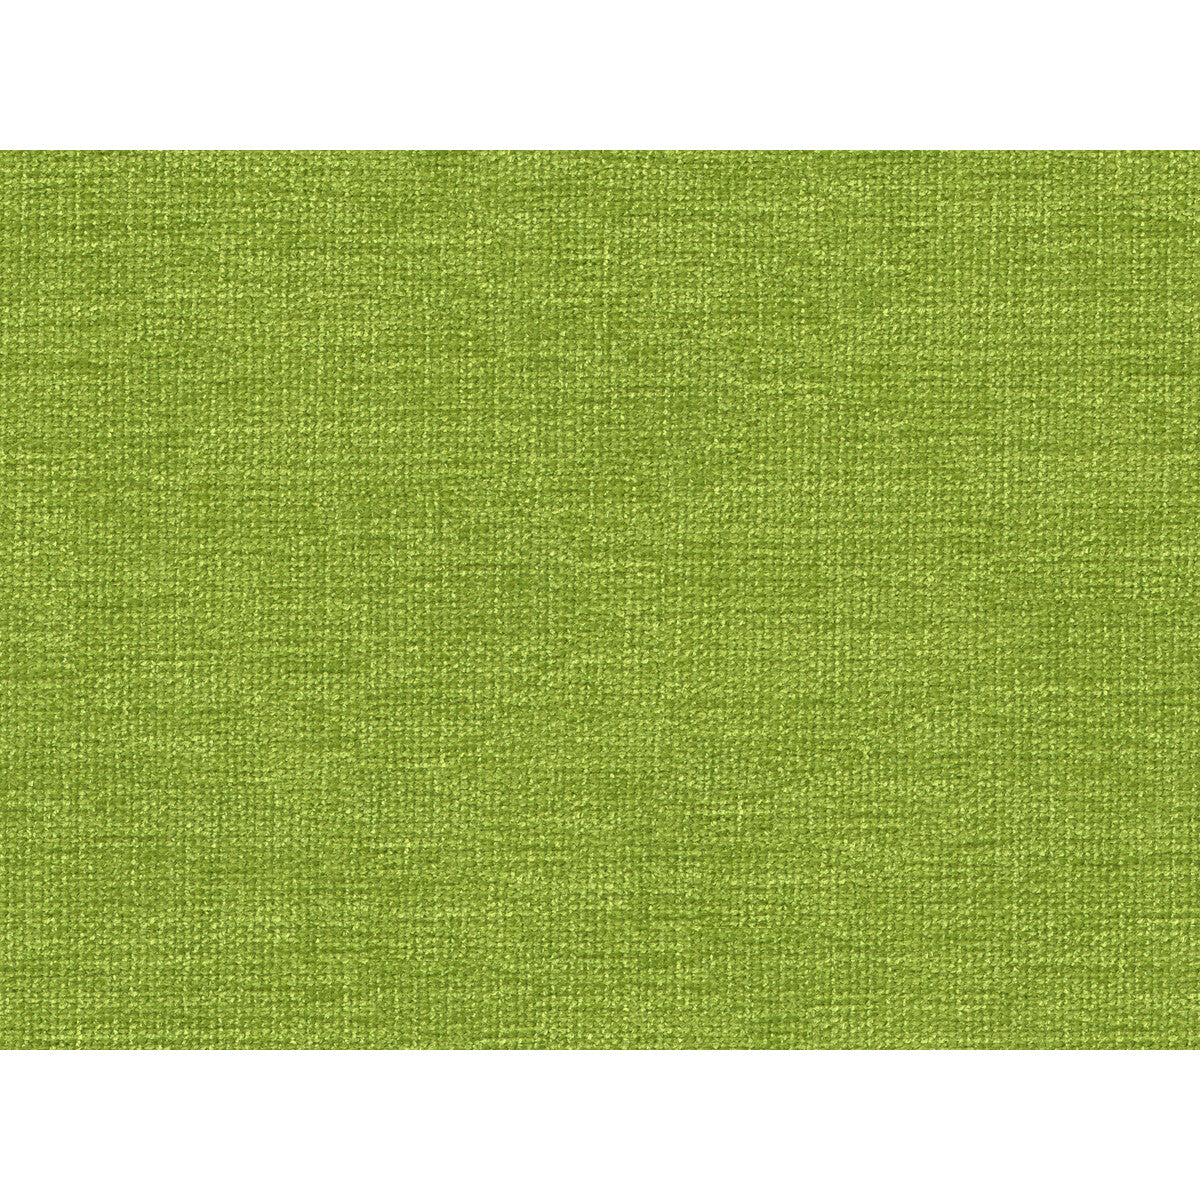 Kravet Smart fabric in 34959-3 color - pattern 34959.3.0 - by Kravet Smart in the Performance Kravetarmor collection